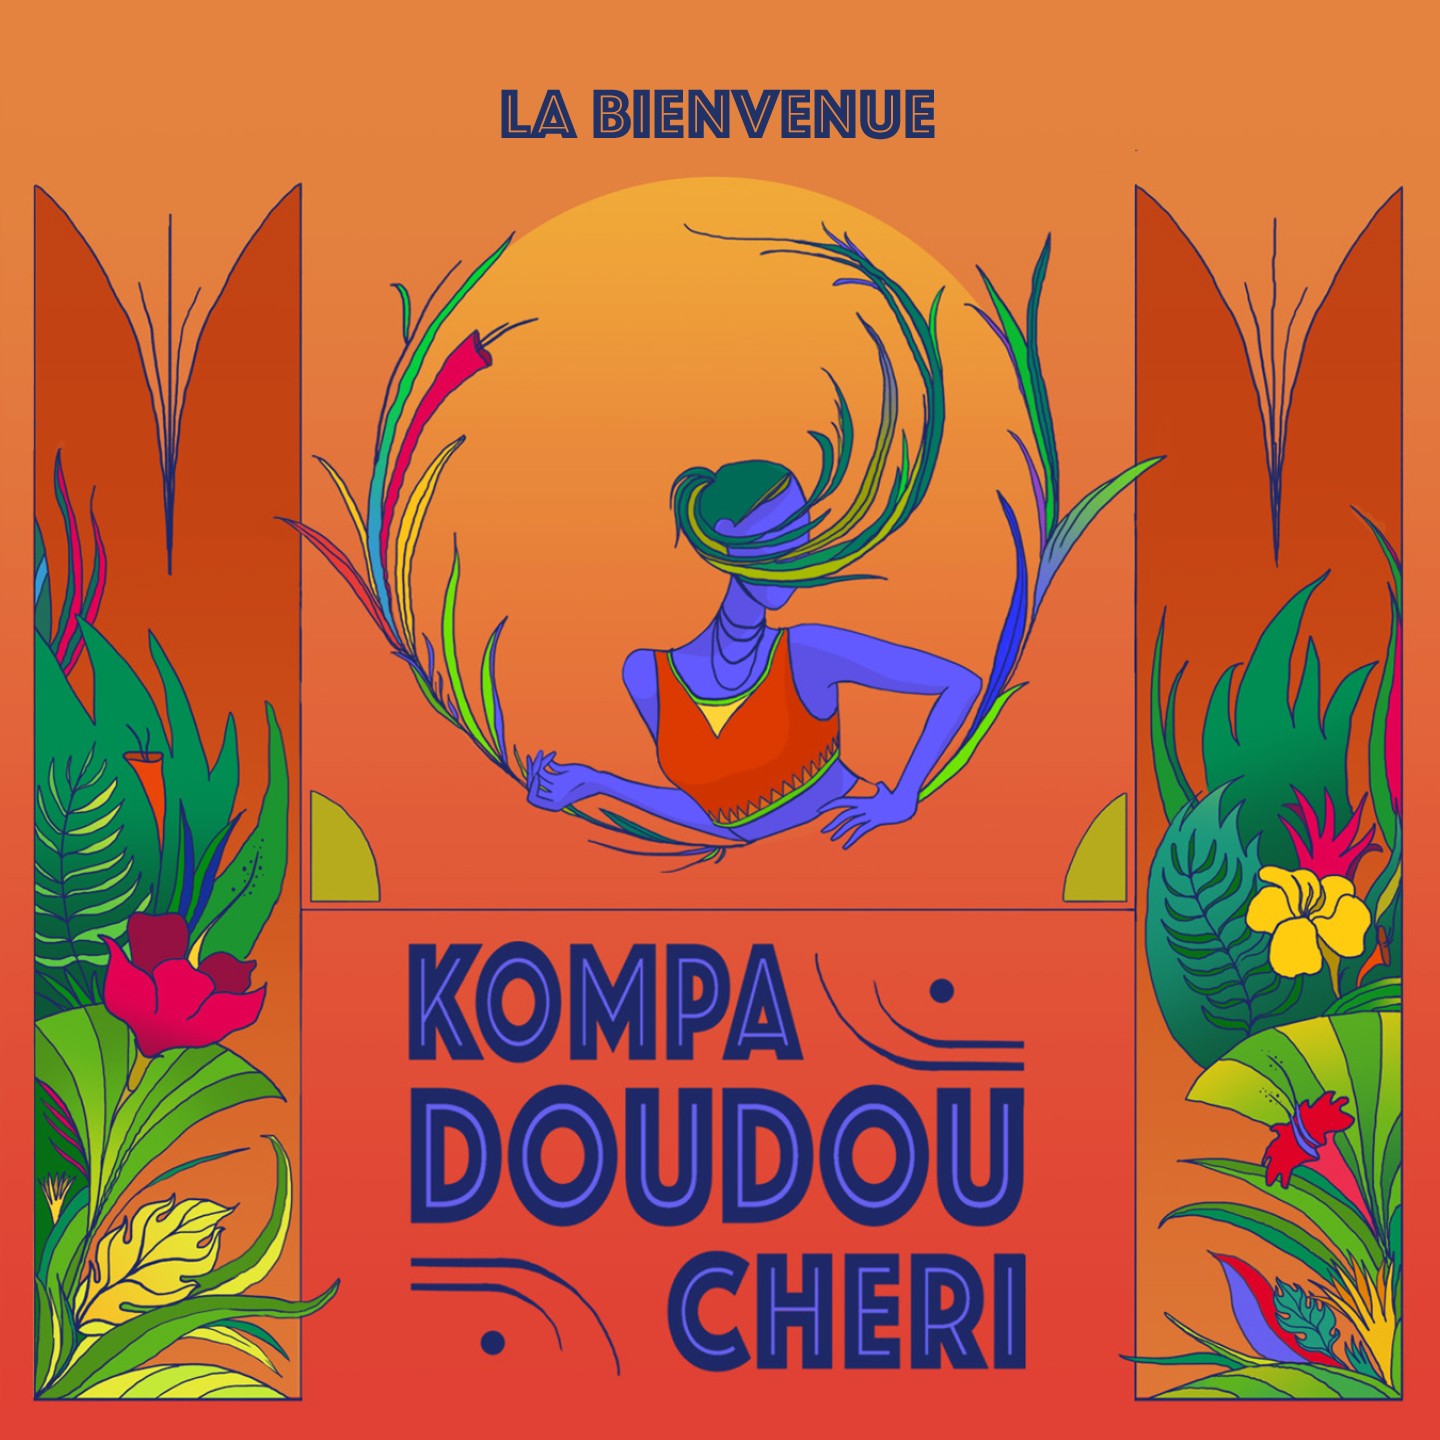 Kompa Doudou Chéri   paulo jorge = Peter Magali = Pidarast La-bienvenue-kompa-doudou-cheri